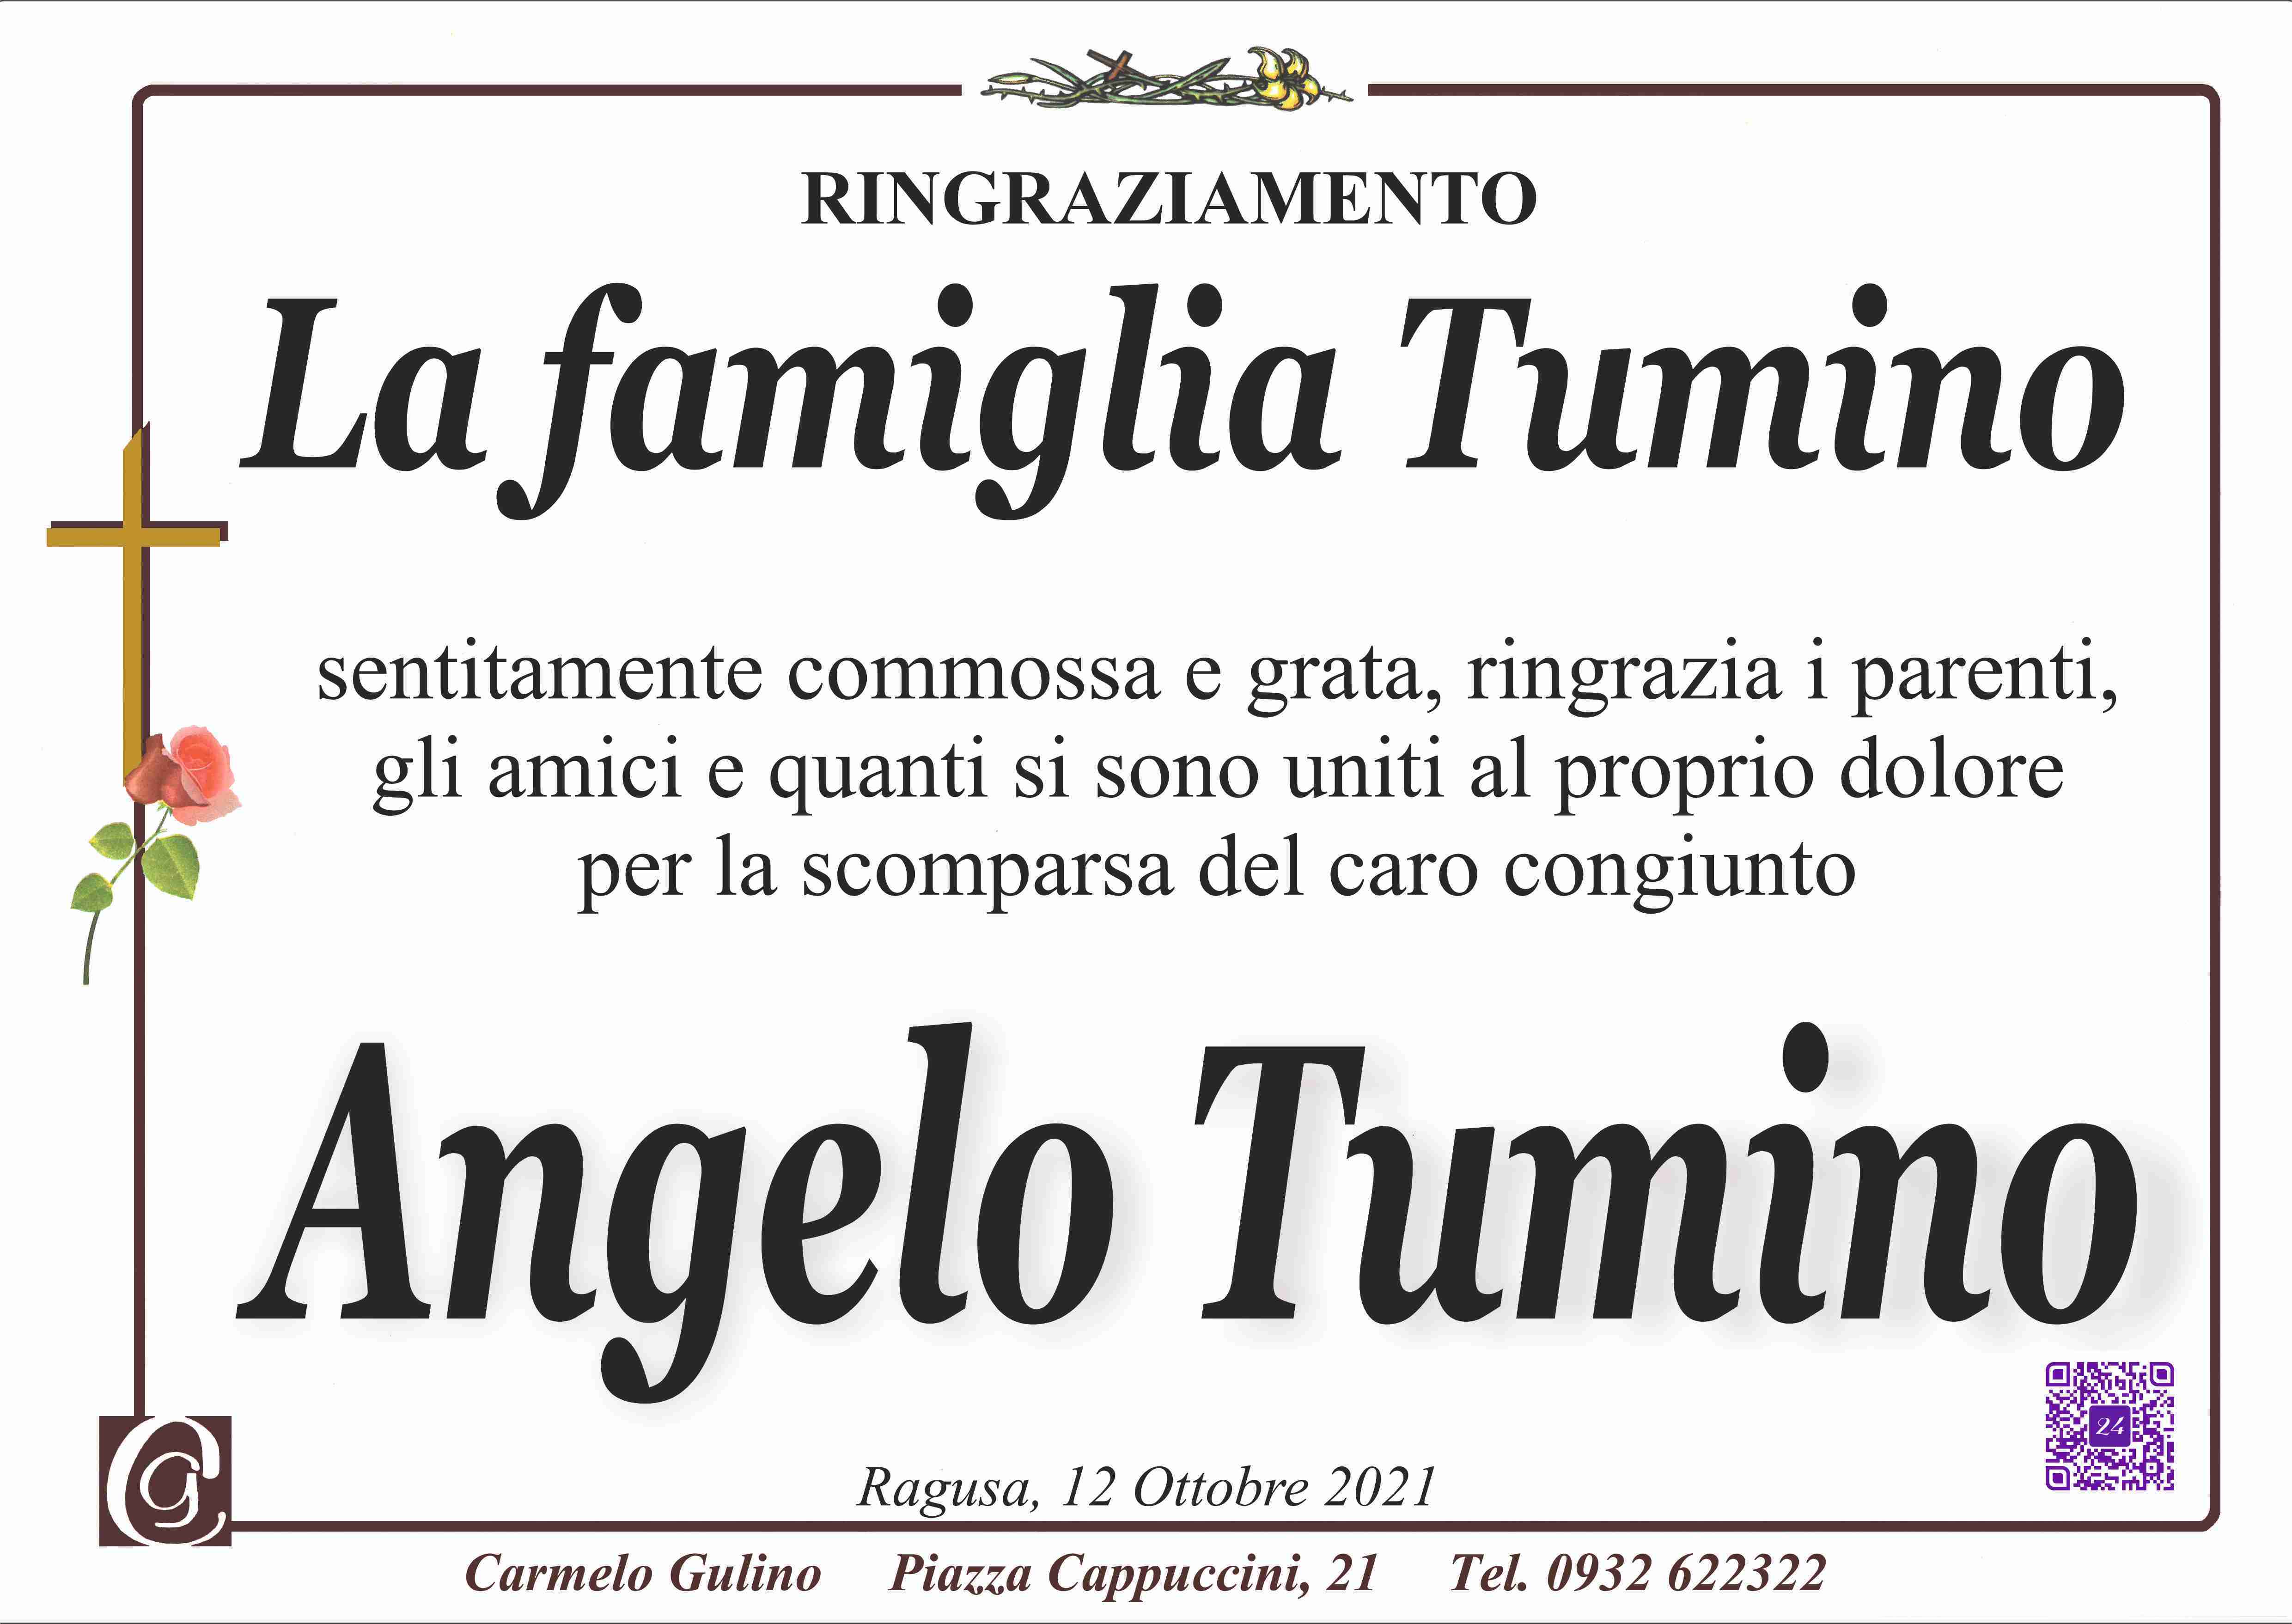 Angelo Tumino